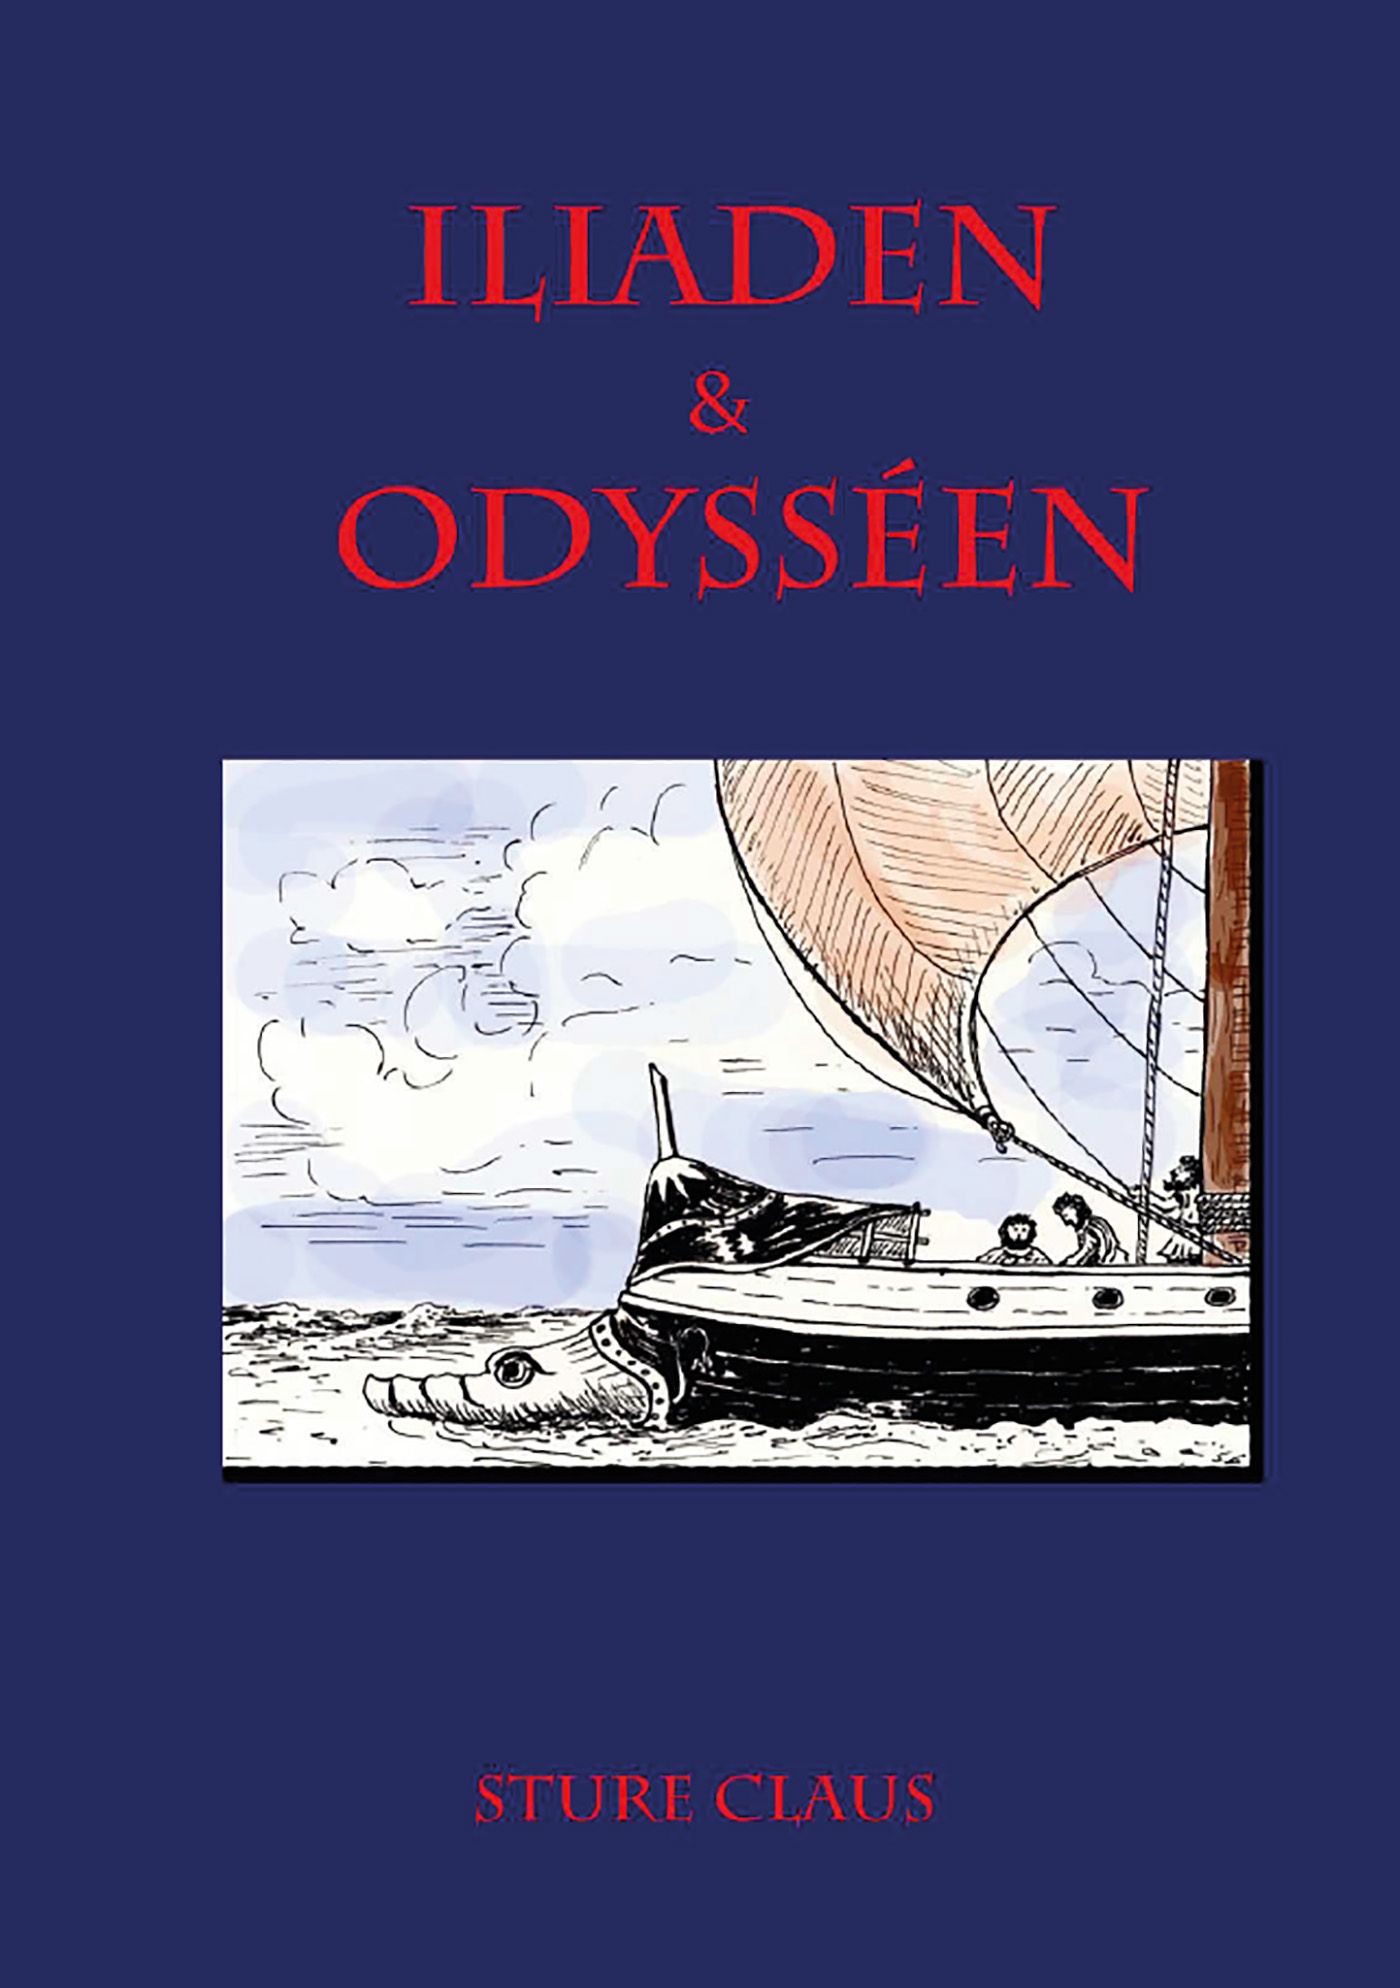 Iliaden & Odysséen, eBook by Sture Claus